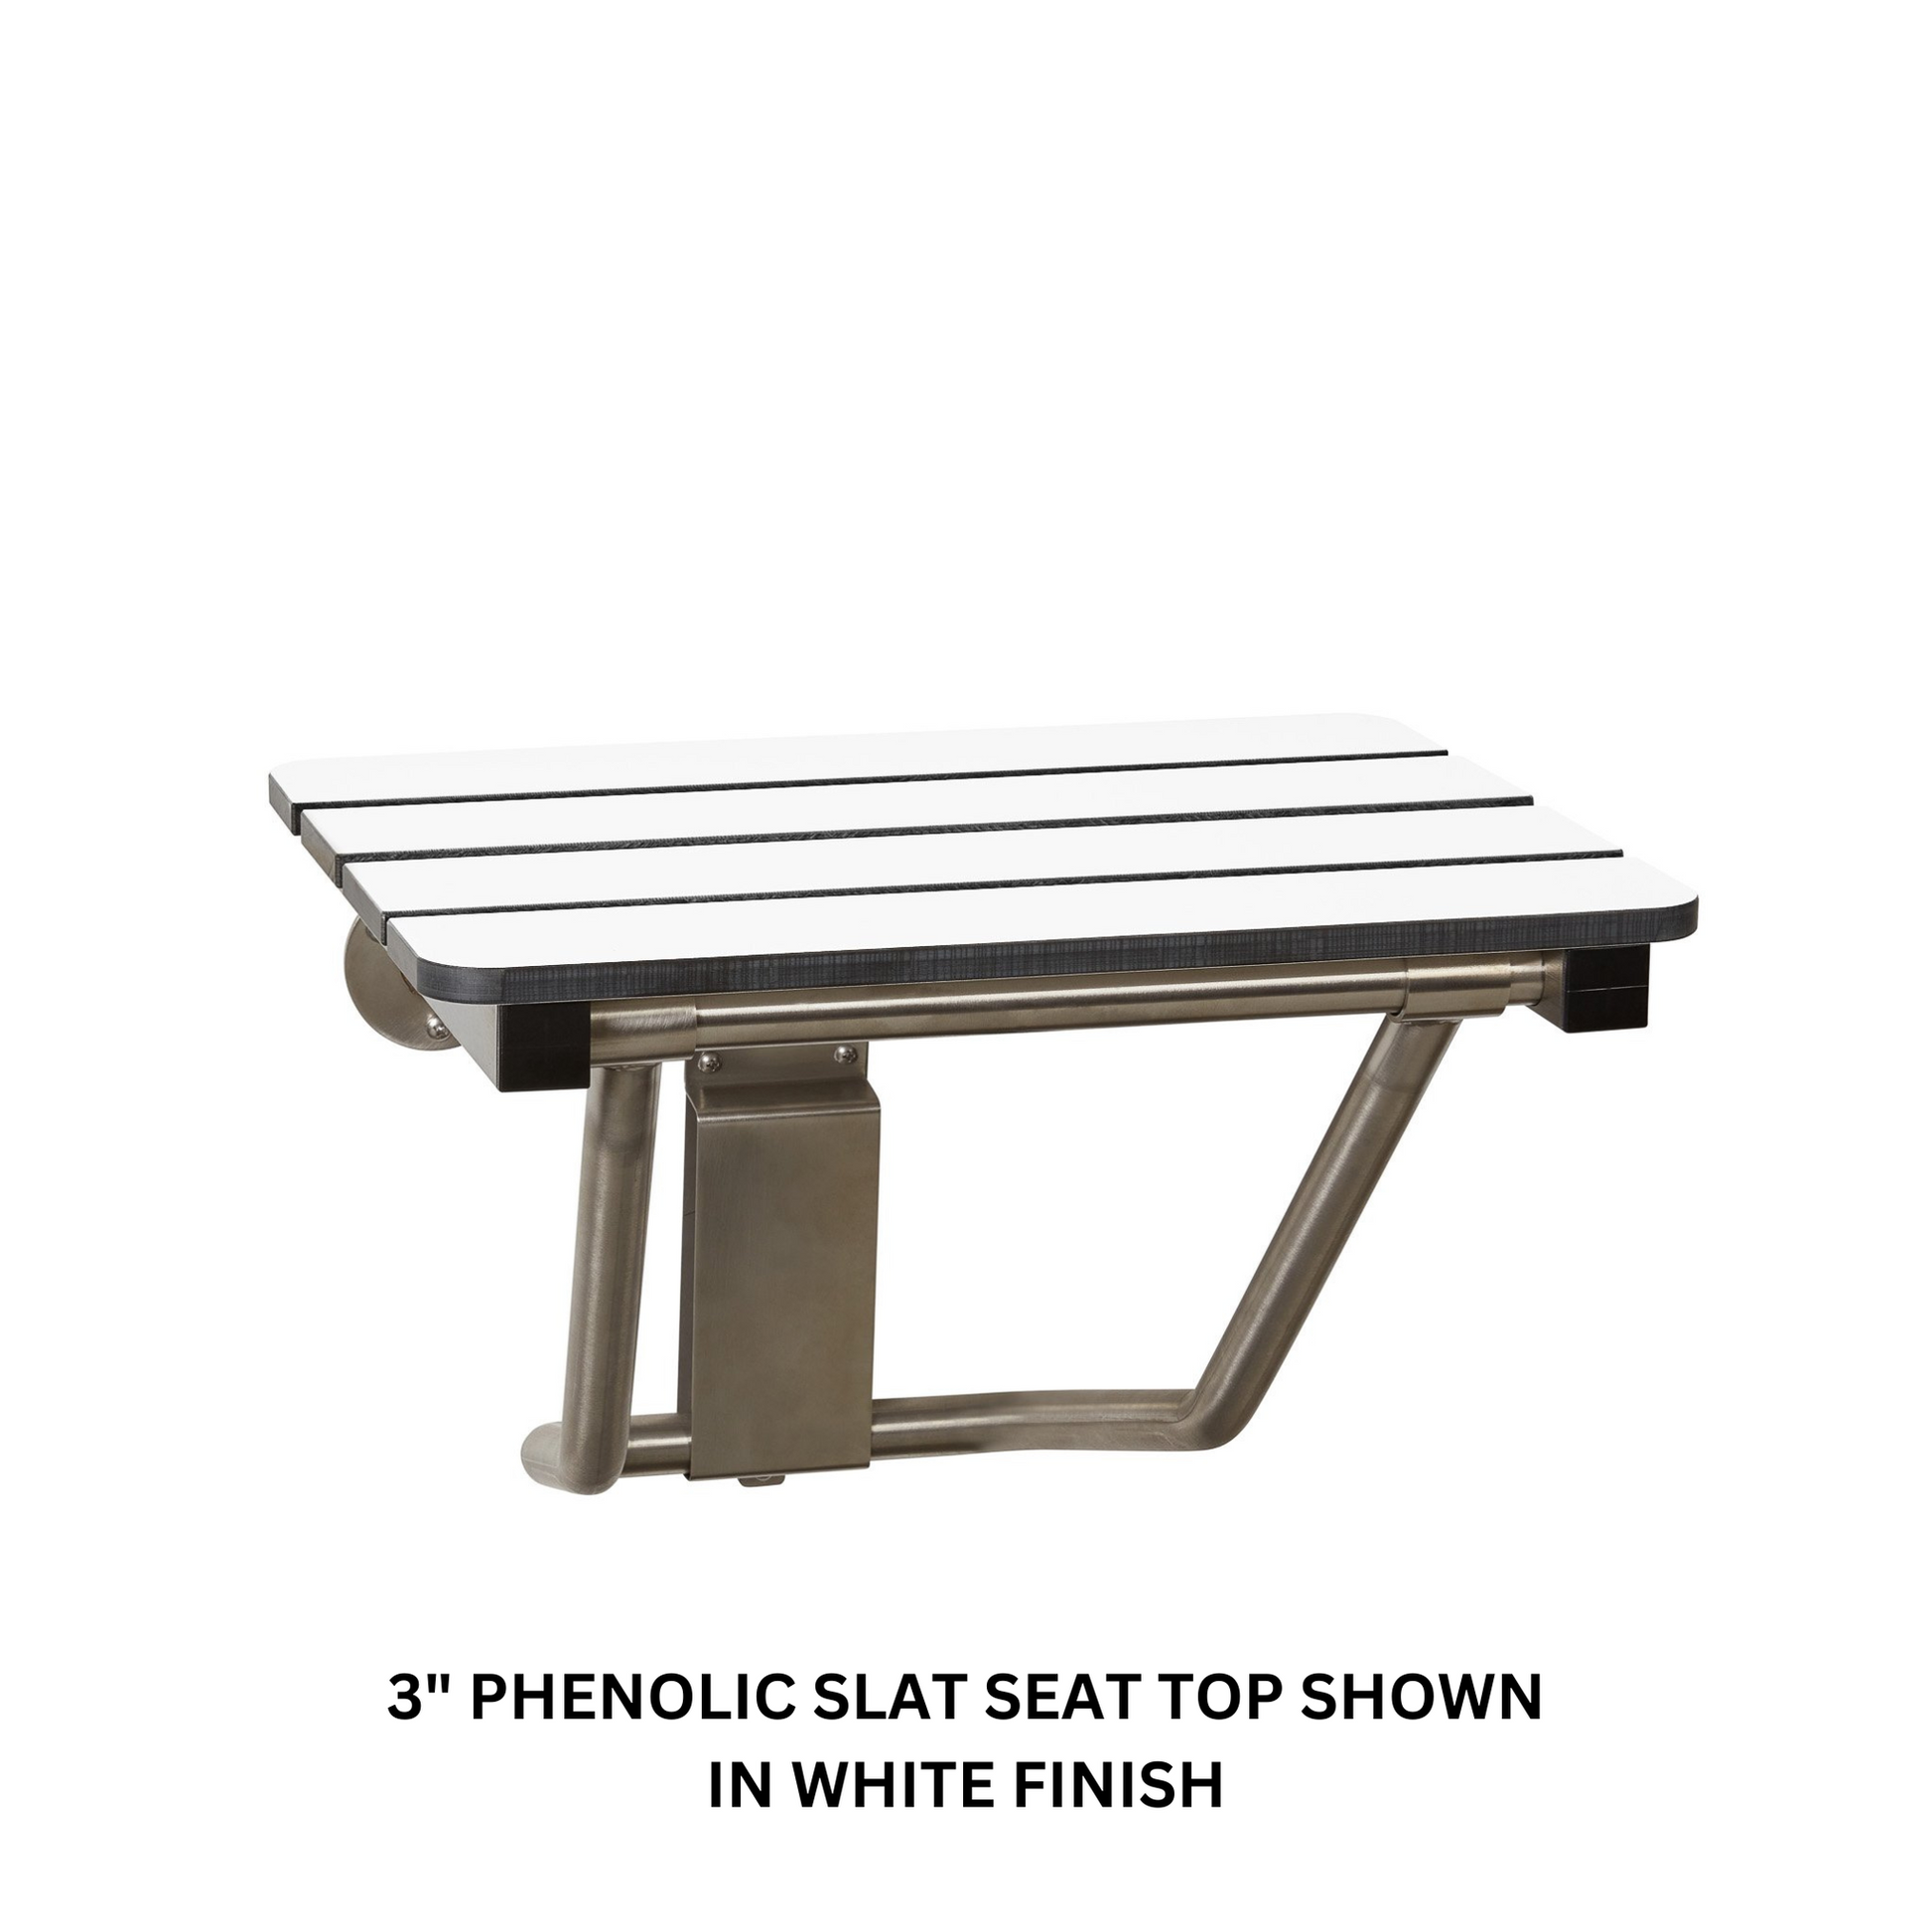 Seachrome Signature Series 22" W x 15" D Black 3" Phenolic Slats Phenolic Seat Top Folding Wall Mount Bench Shower Seat